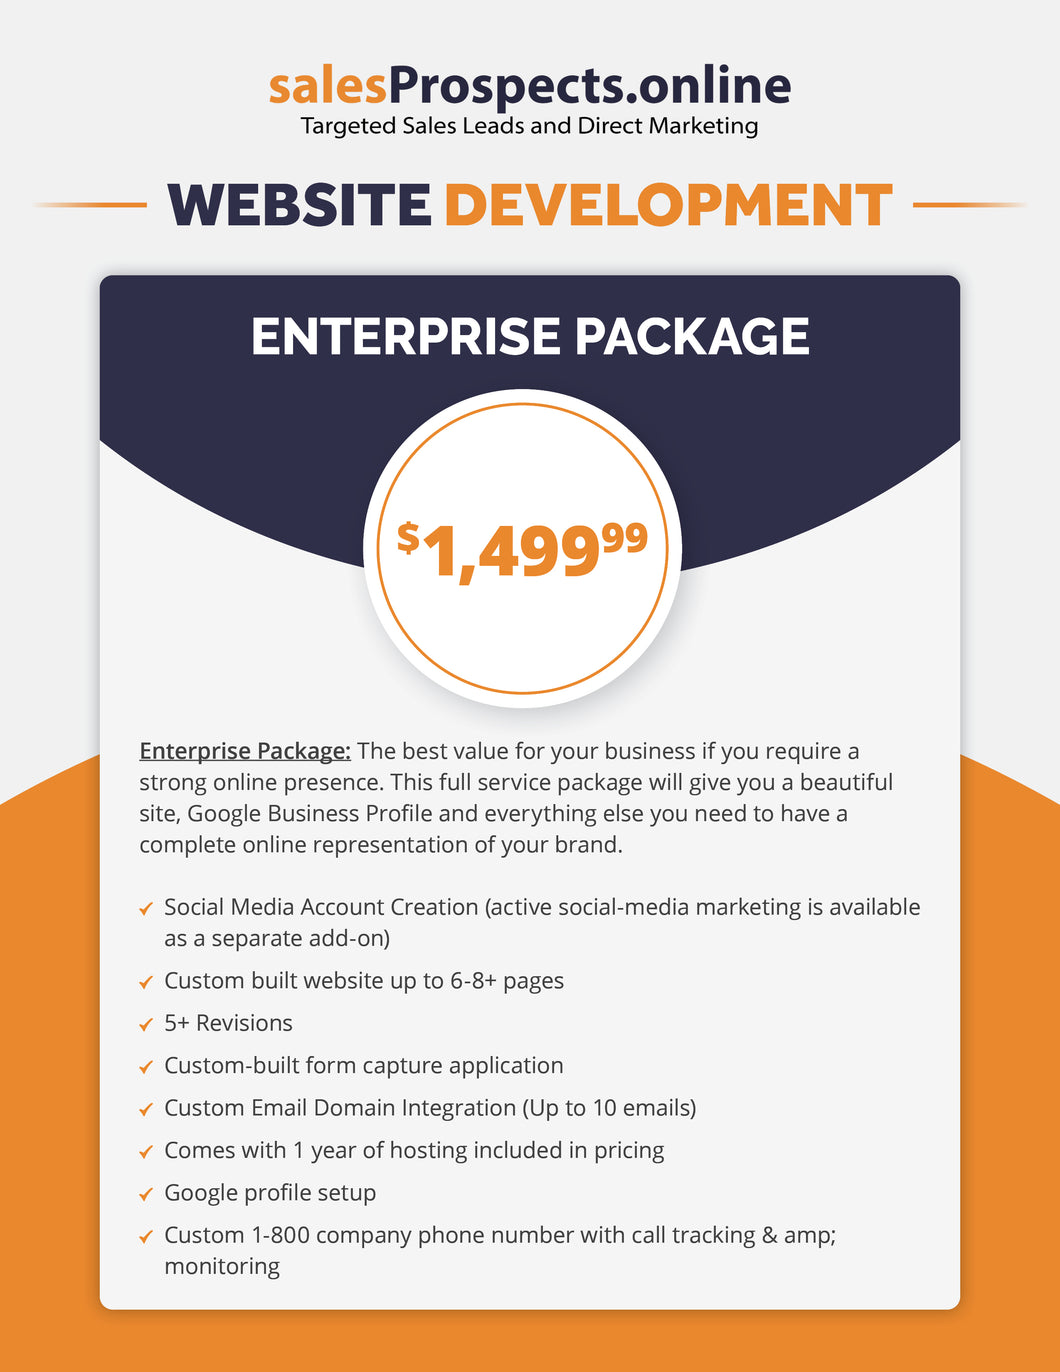 Website Development: Enterprise Package